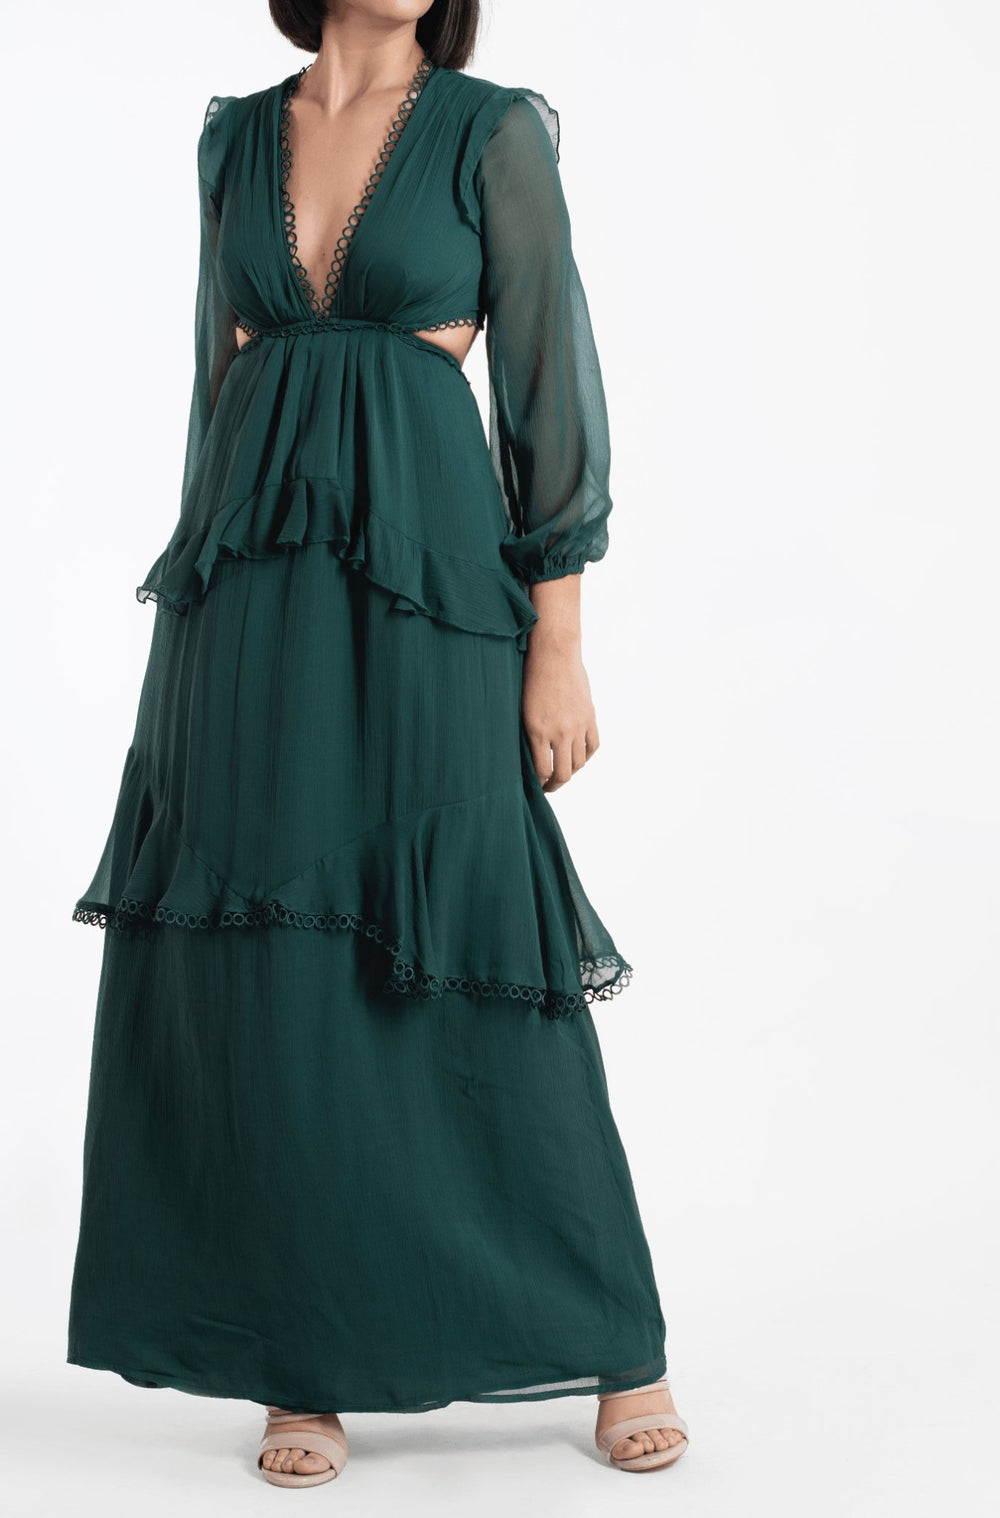 Silvia - verde - Lend the Trend renta de vestidos mexico